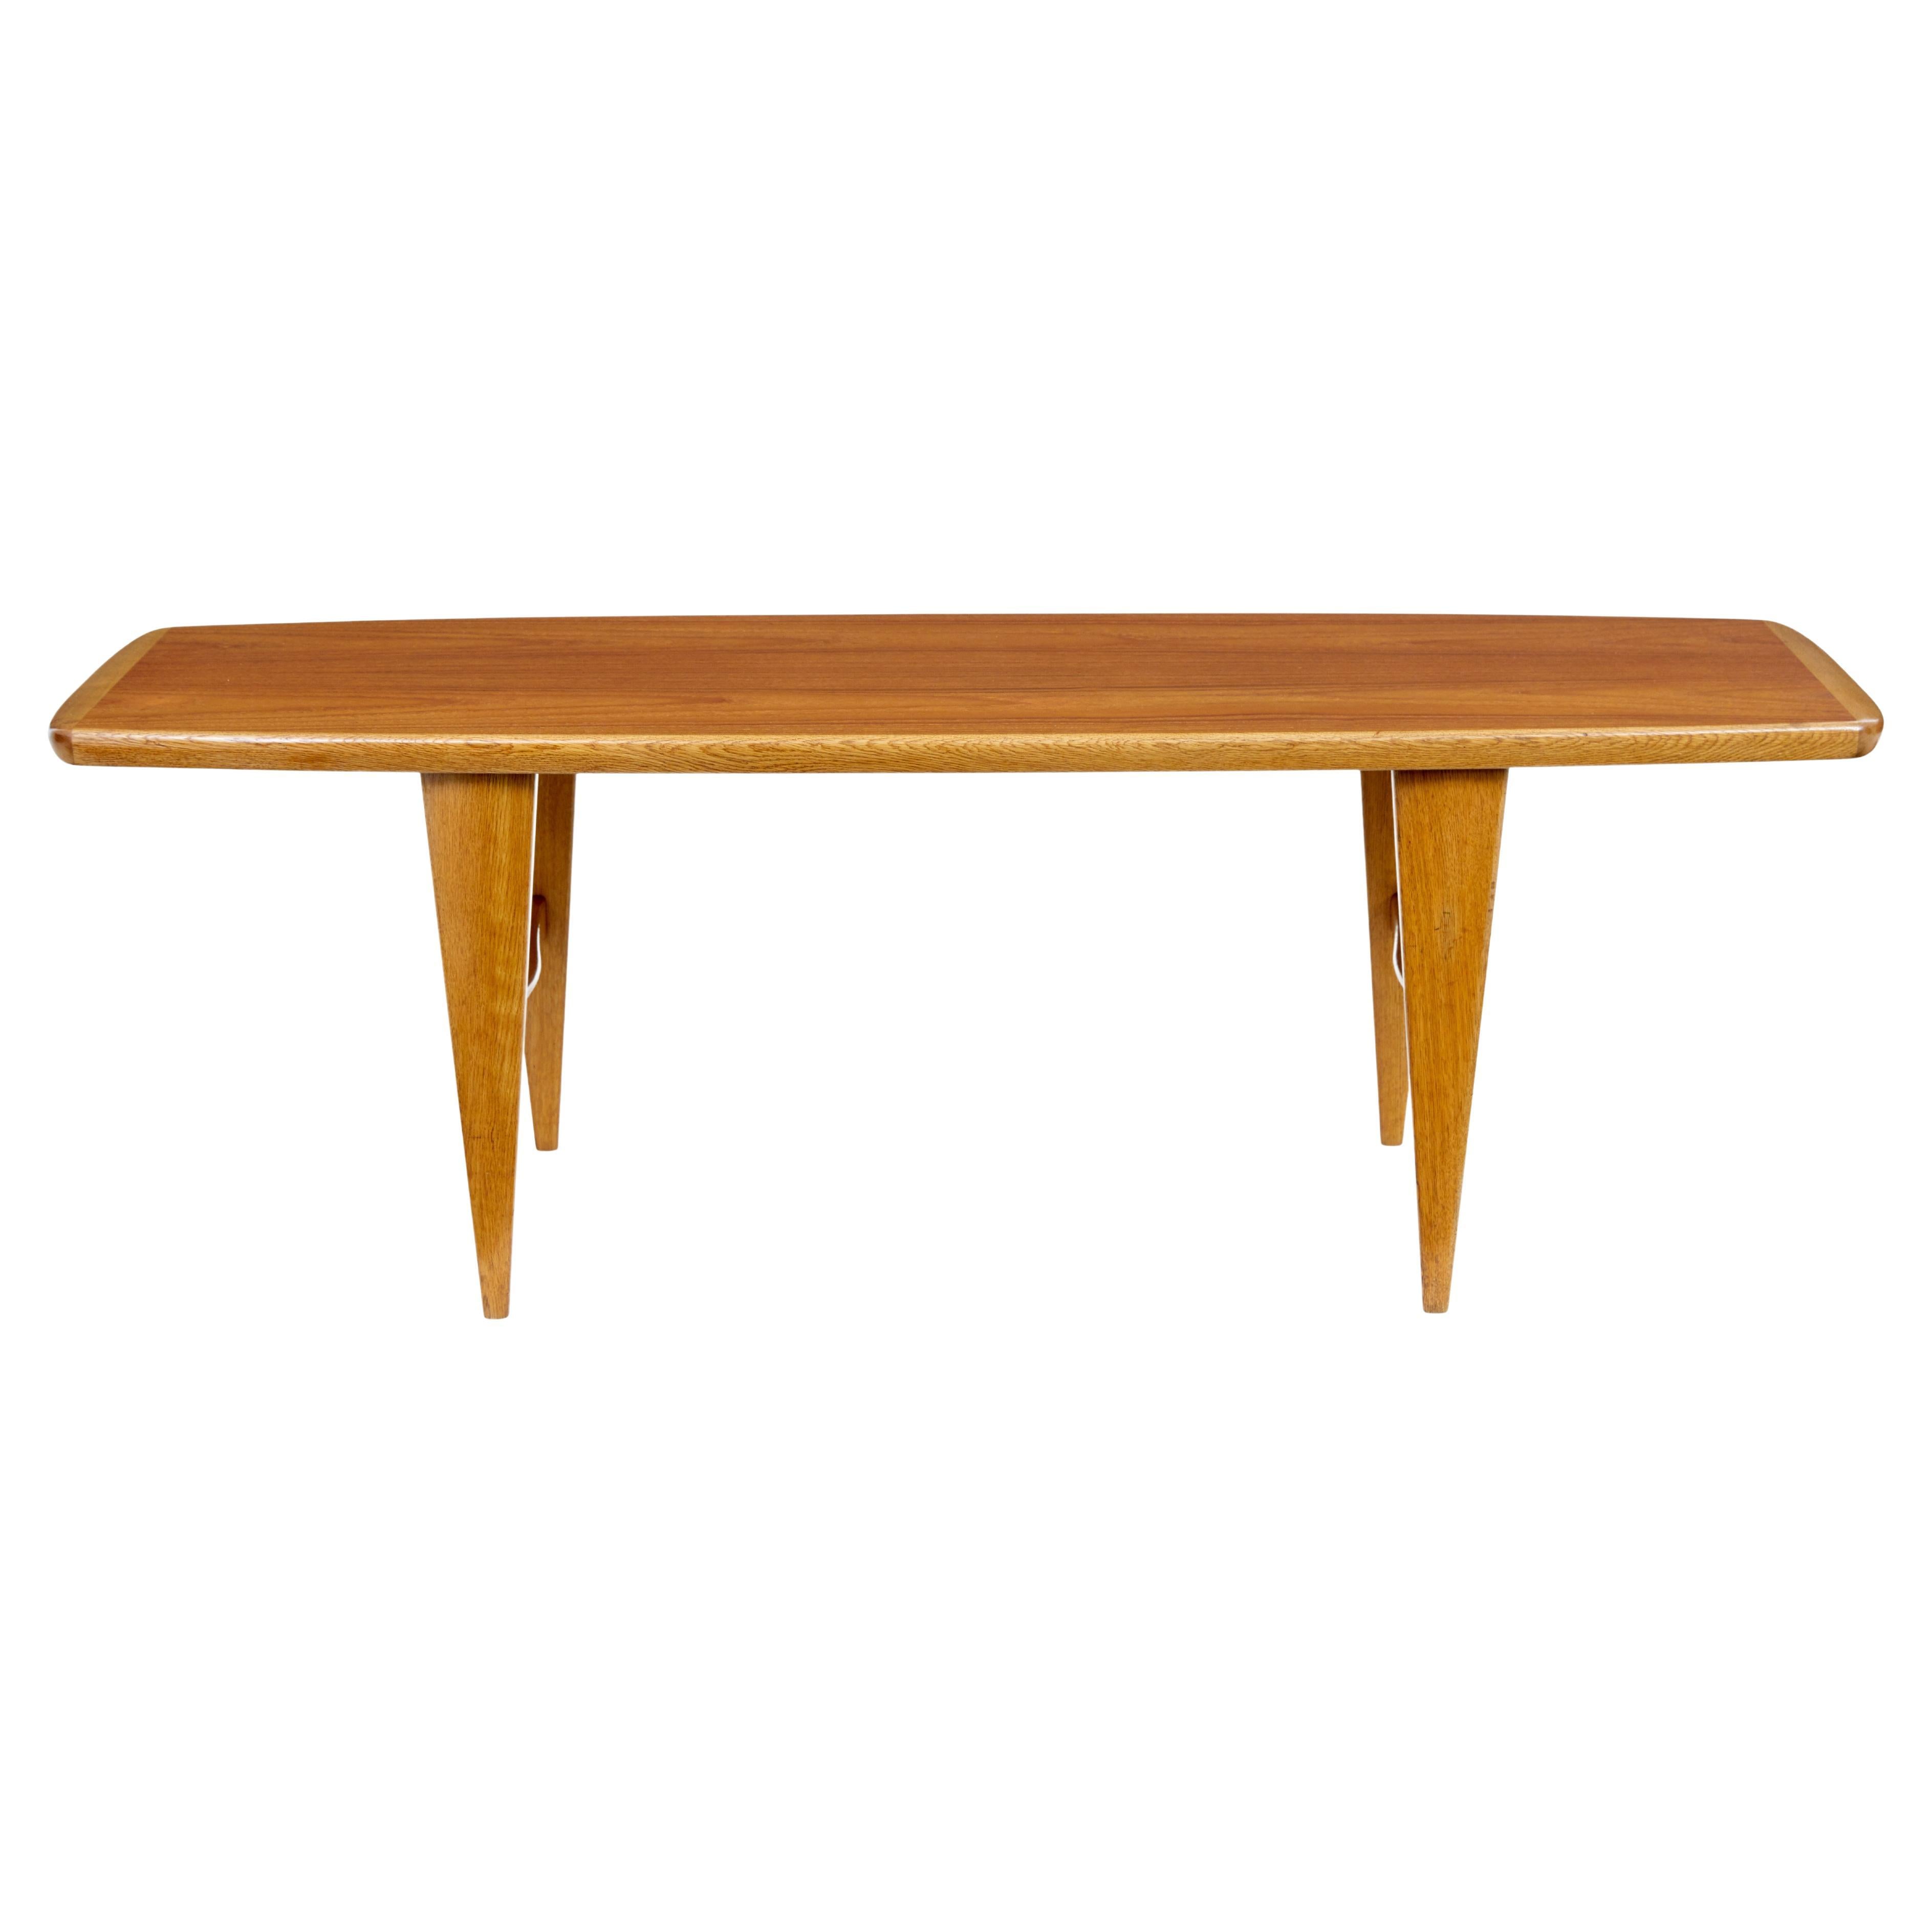 Mid 20th century Scandinavian teak coffee table